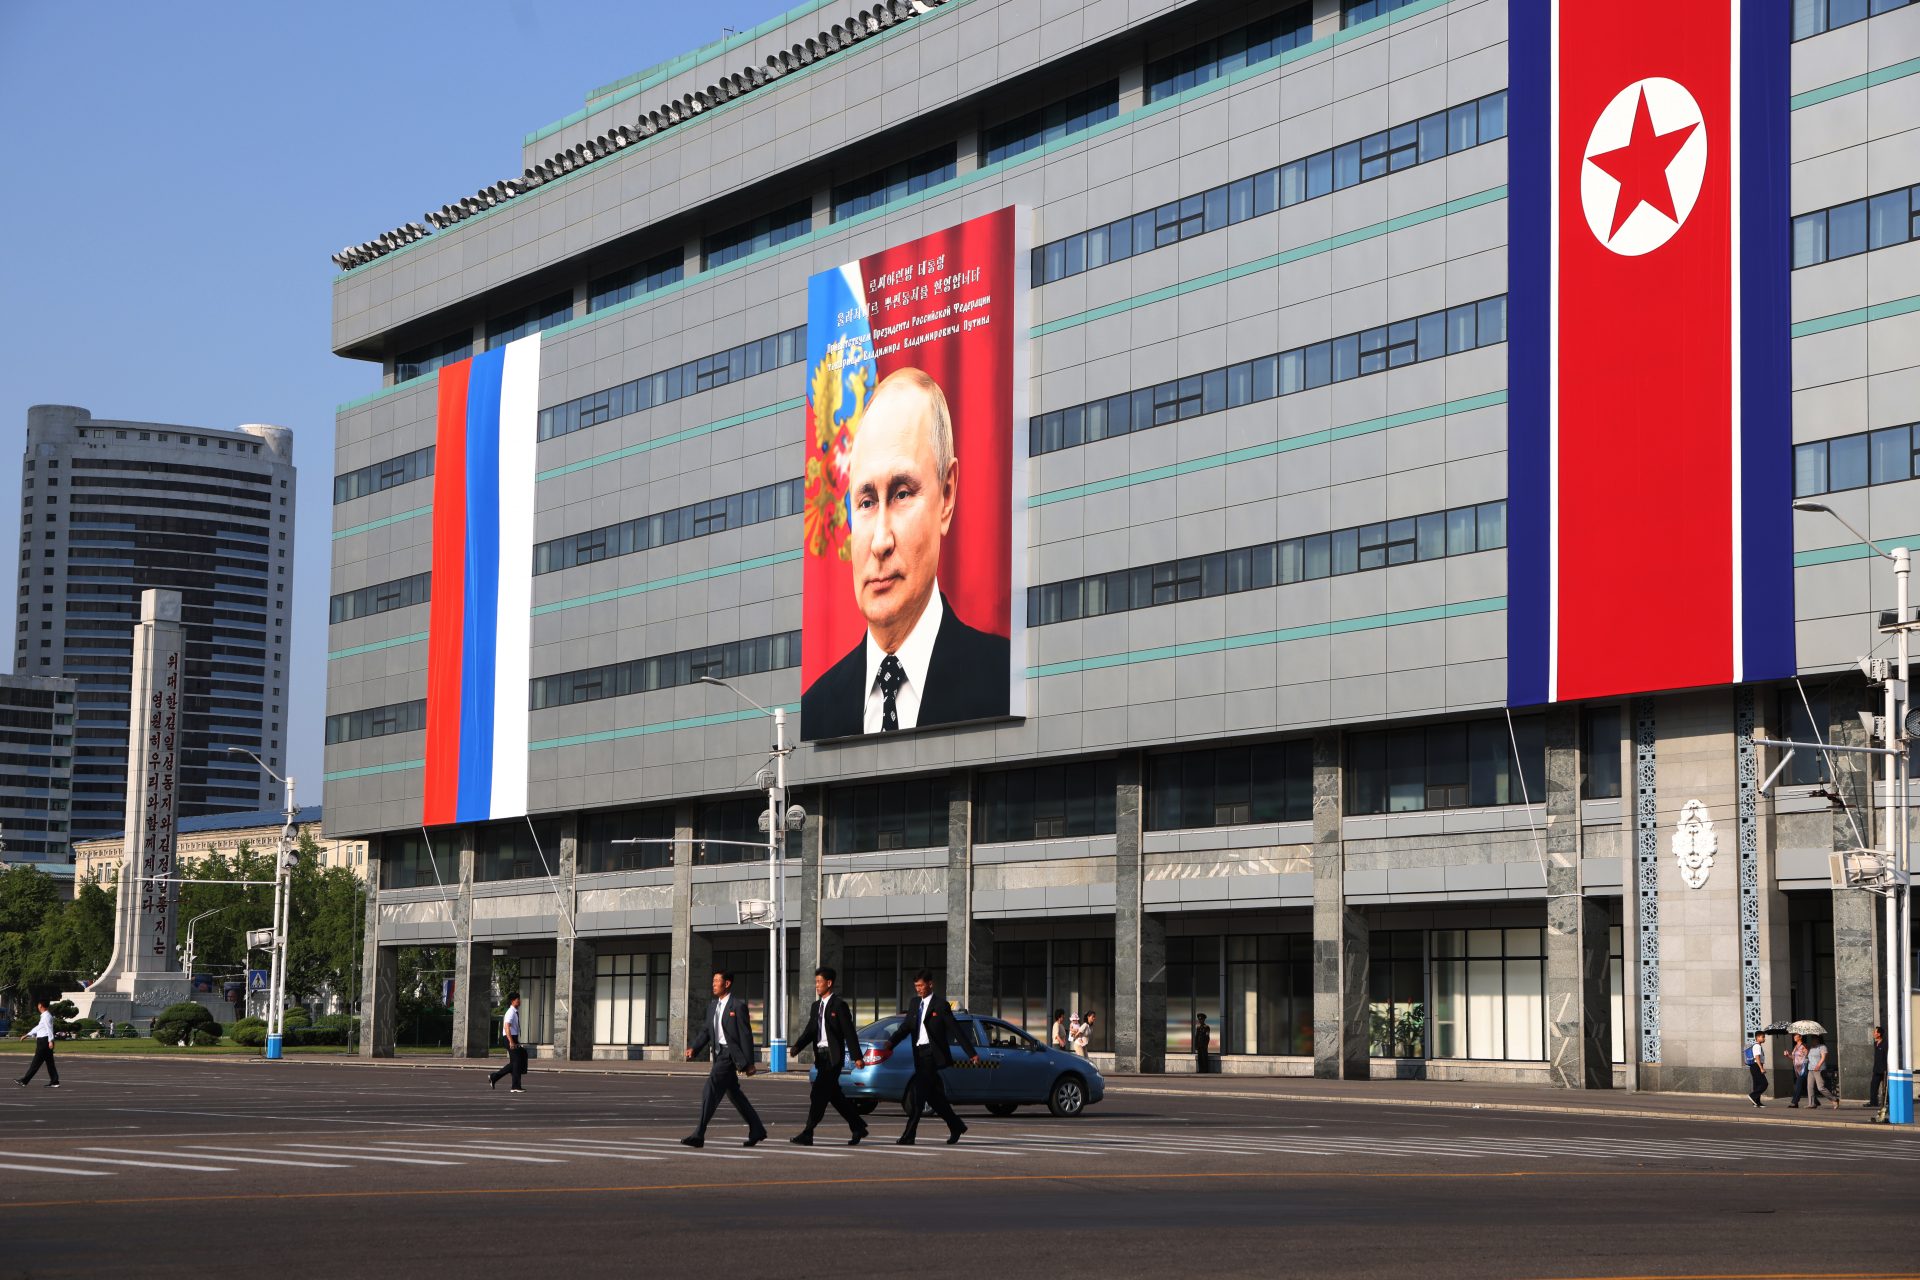 Putin’s visit to North Korea 